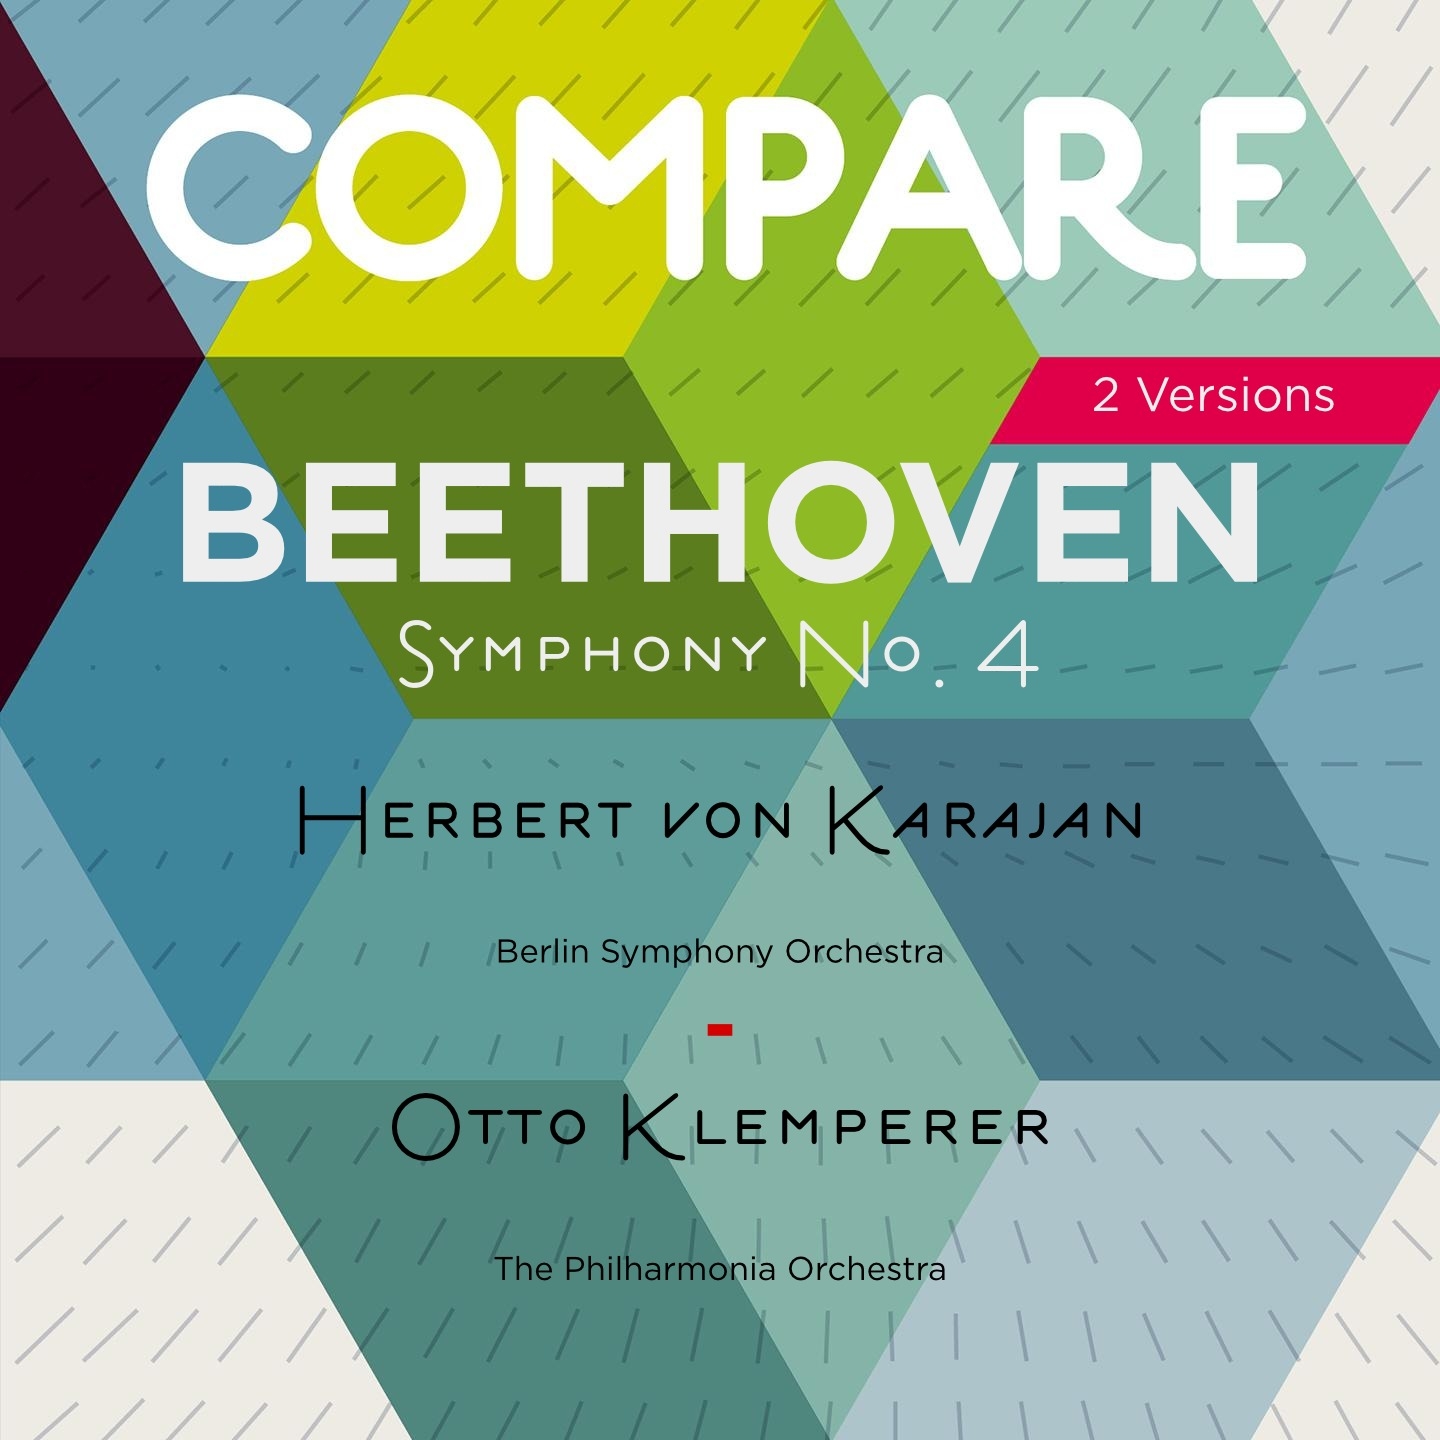 Beethoven: Symphony No. 4, Herbert von Karajan vs. Otto Klemperer